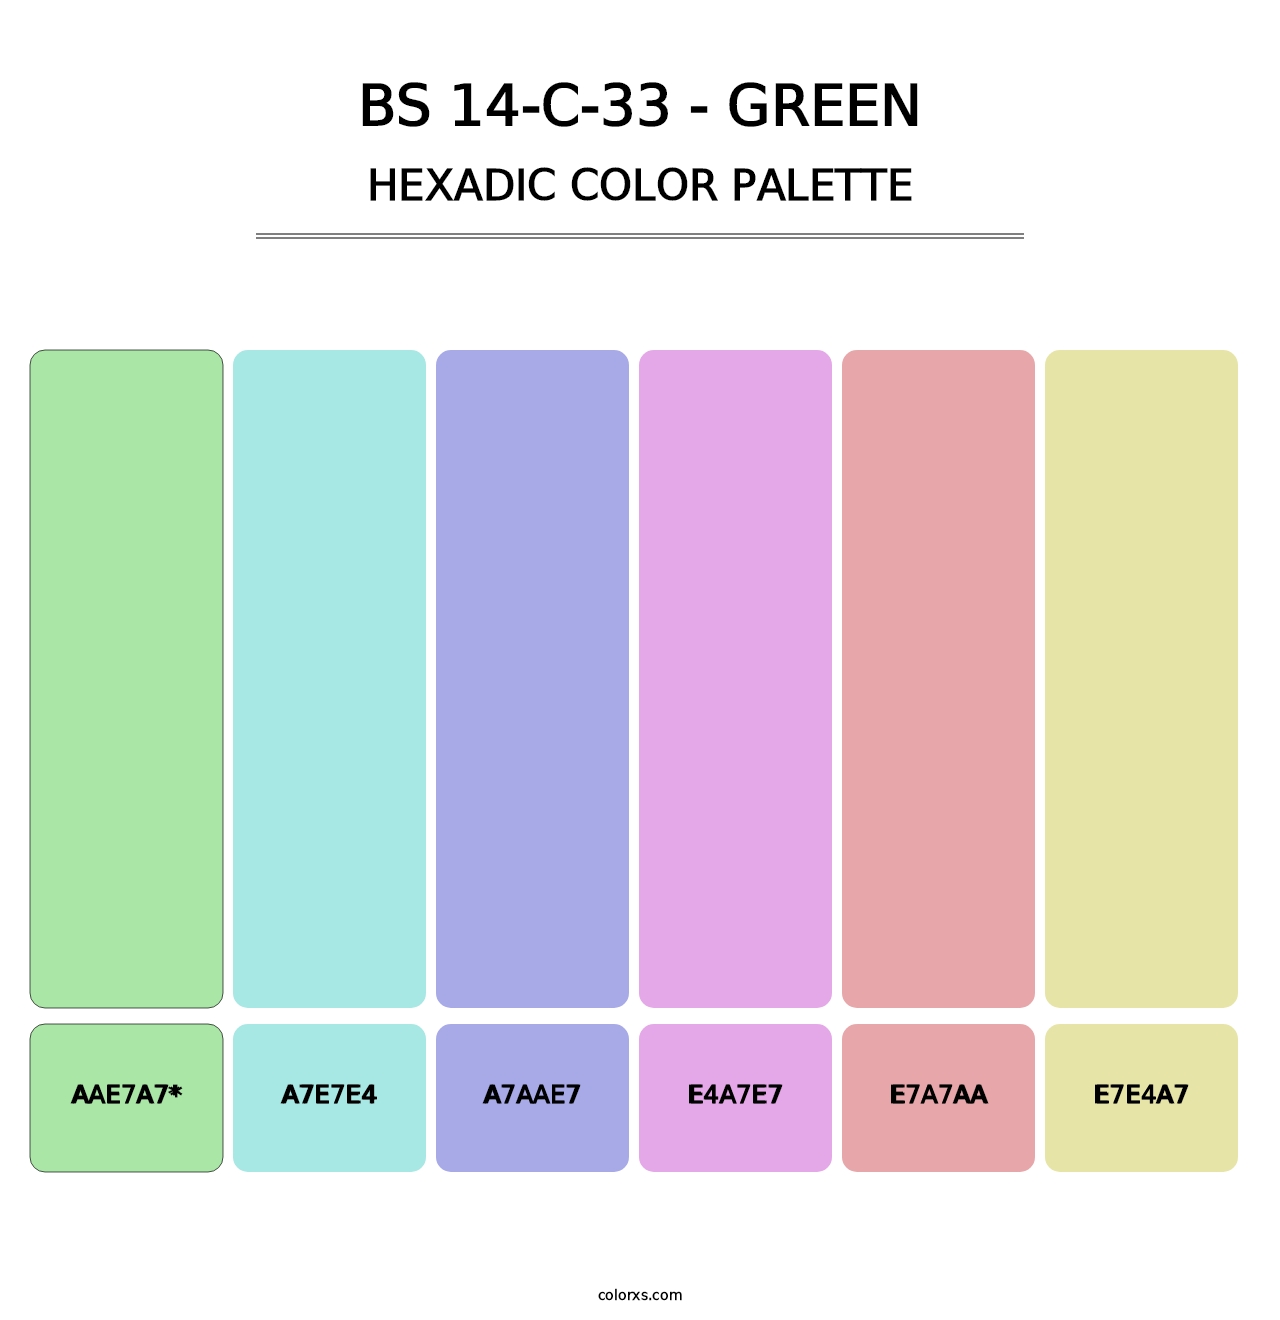 BS 14-C-33 - Green - Hexadic Color Palette